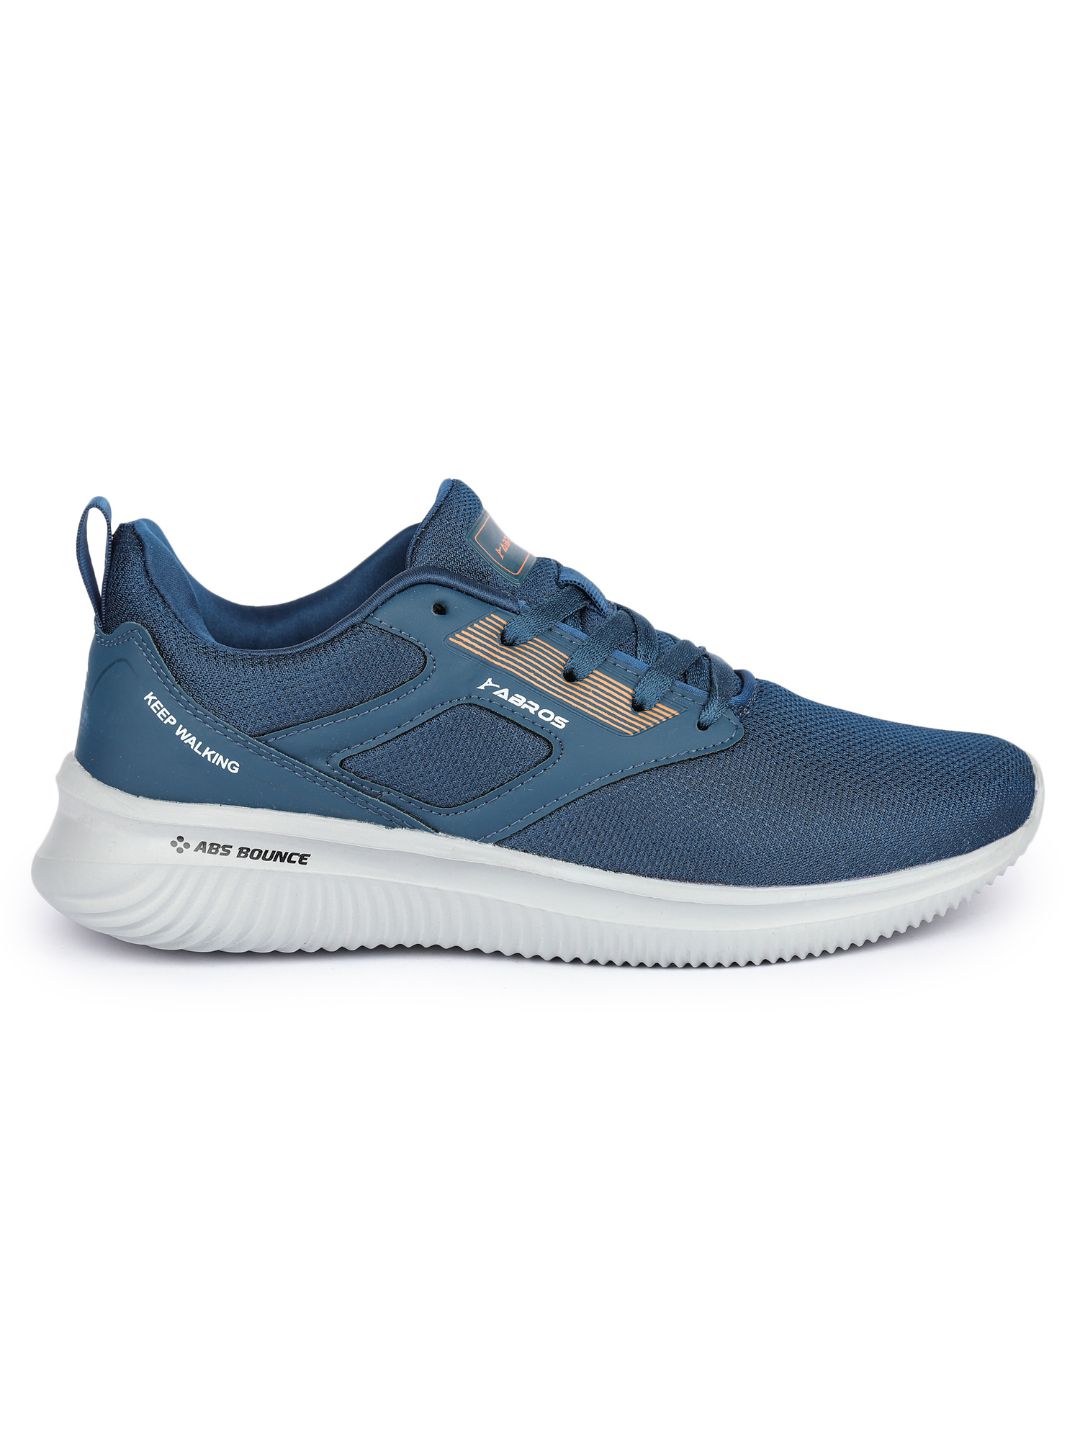 Buy Men Navy Blue & Orange Glide-N Running Shoes From Fancode Shop.